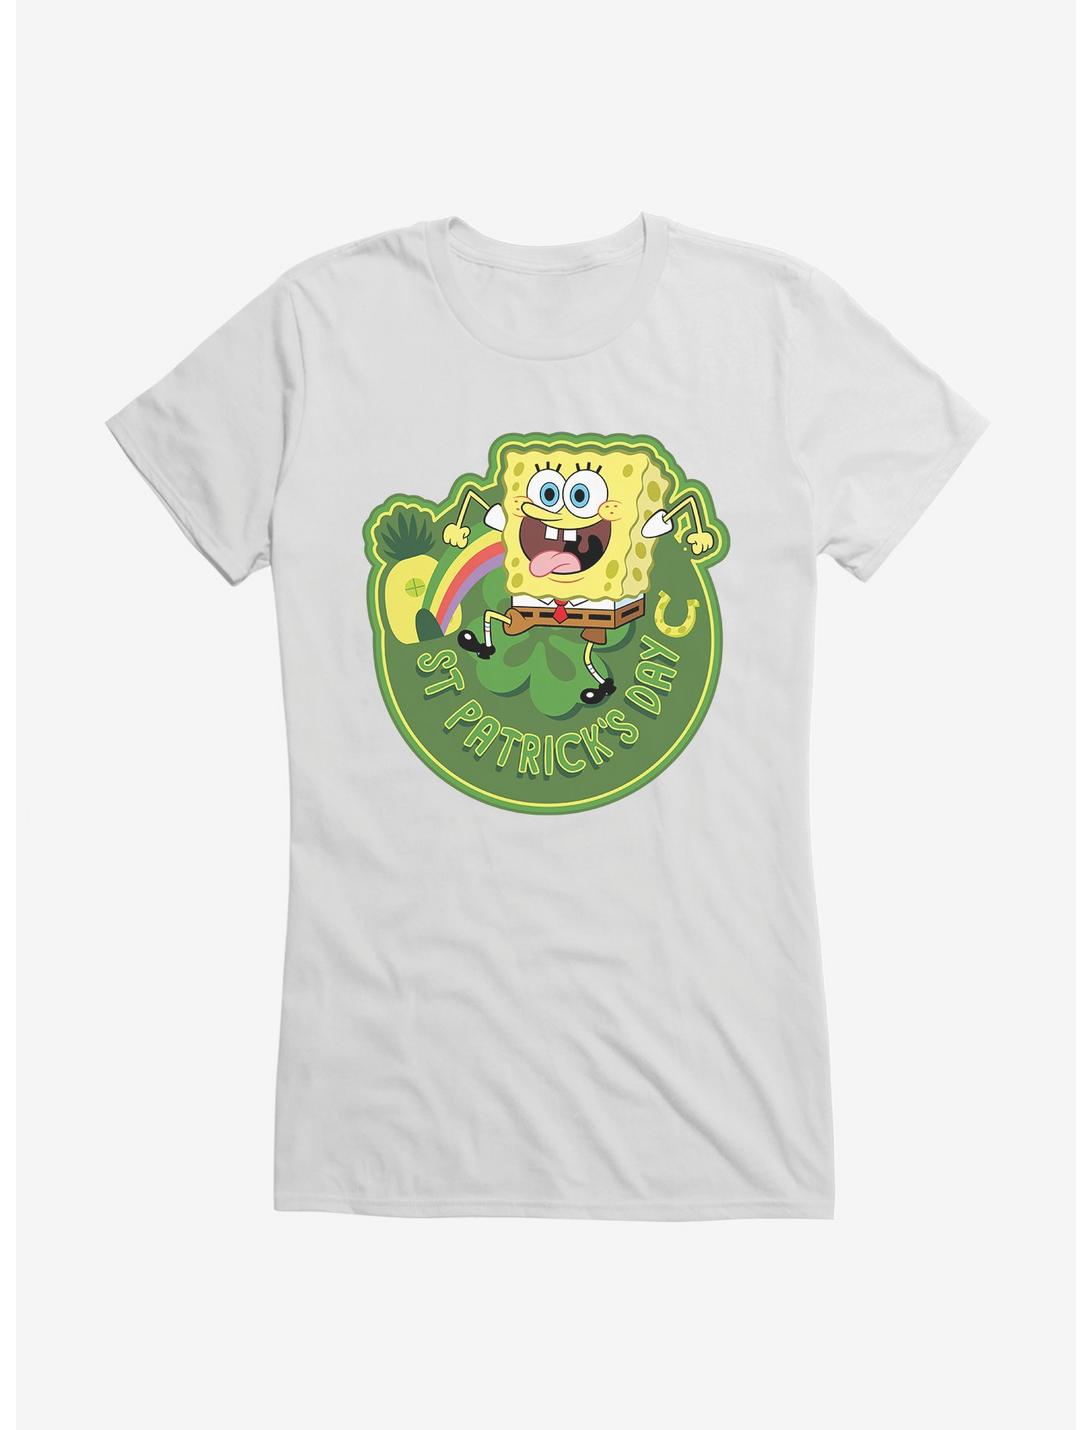 SpongeBob SquarePants St. Patrick's Day Icon Girls T-Shirt, WHITE, hi-res